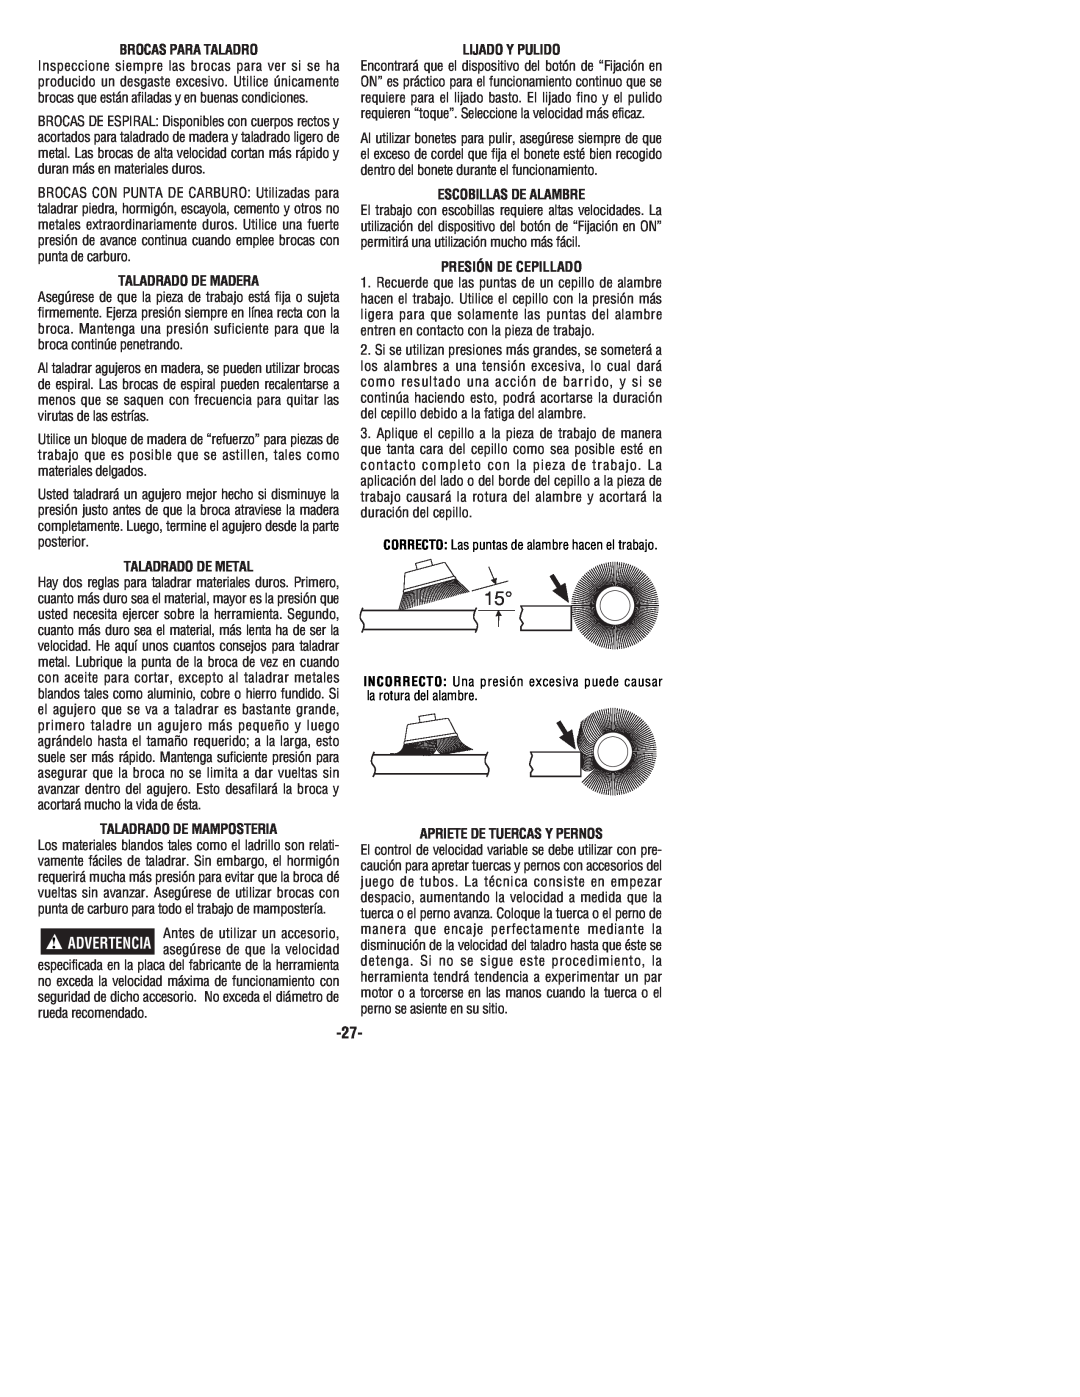 Bosch Power Tools 1199VSR manual Brocas Para Taladro, Taladrado De Madera, Taladrado De Metal, Taladrado De Mamposteria 